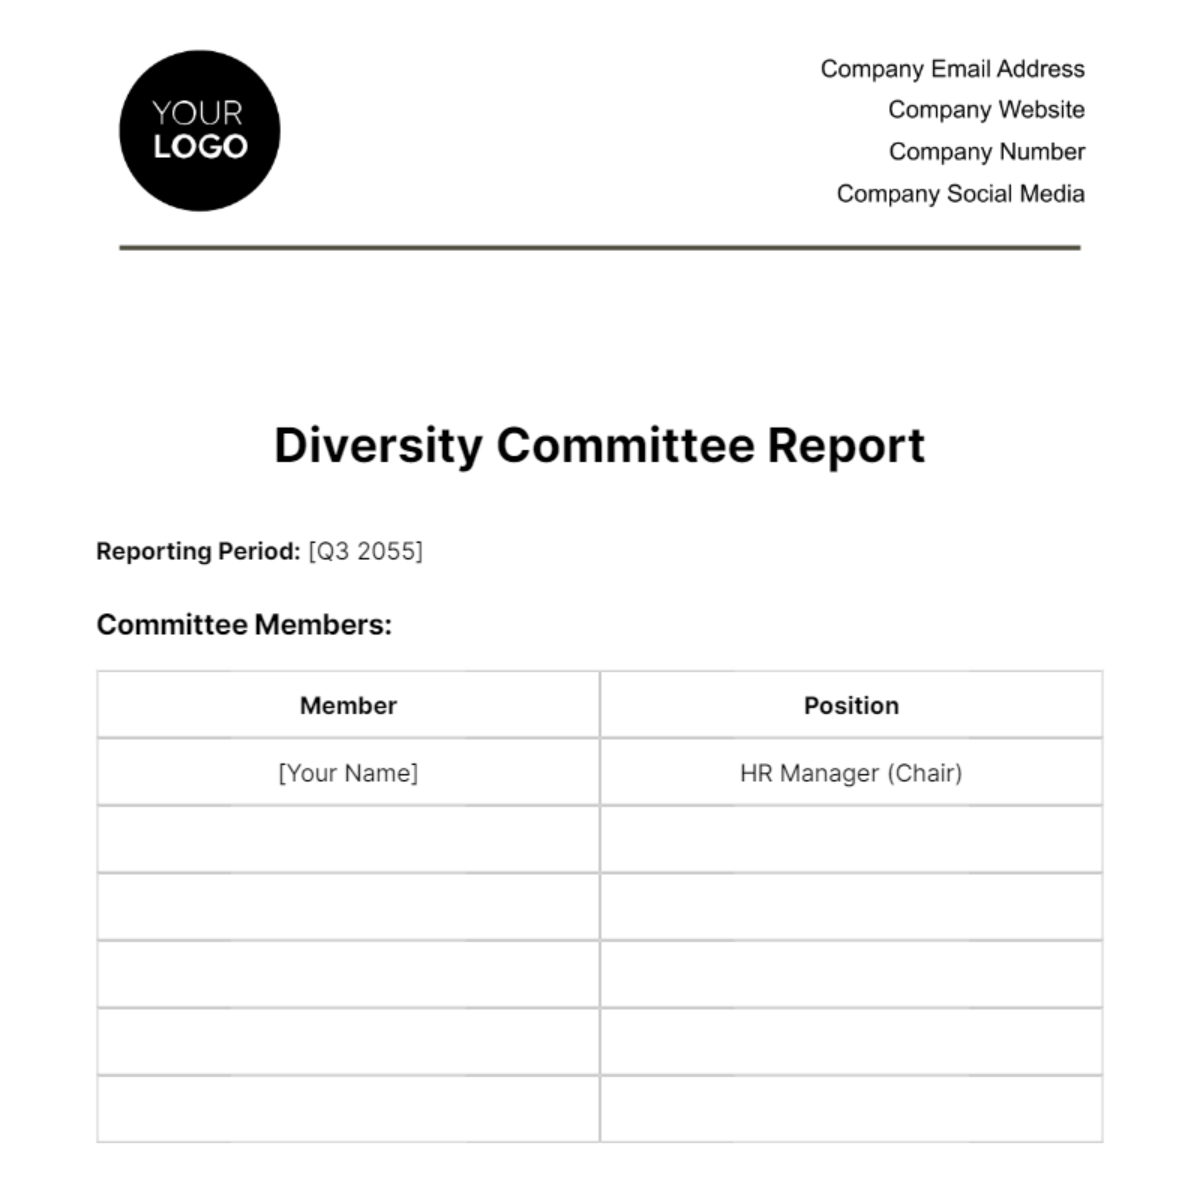 Diversity Committee Report HR Template